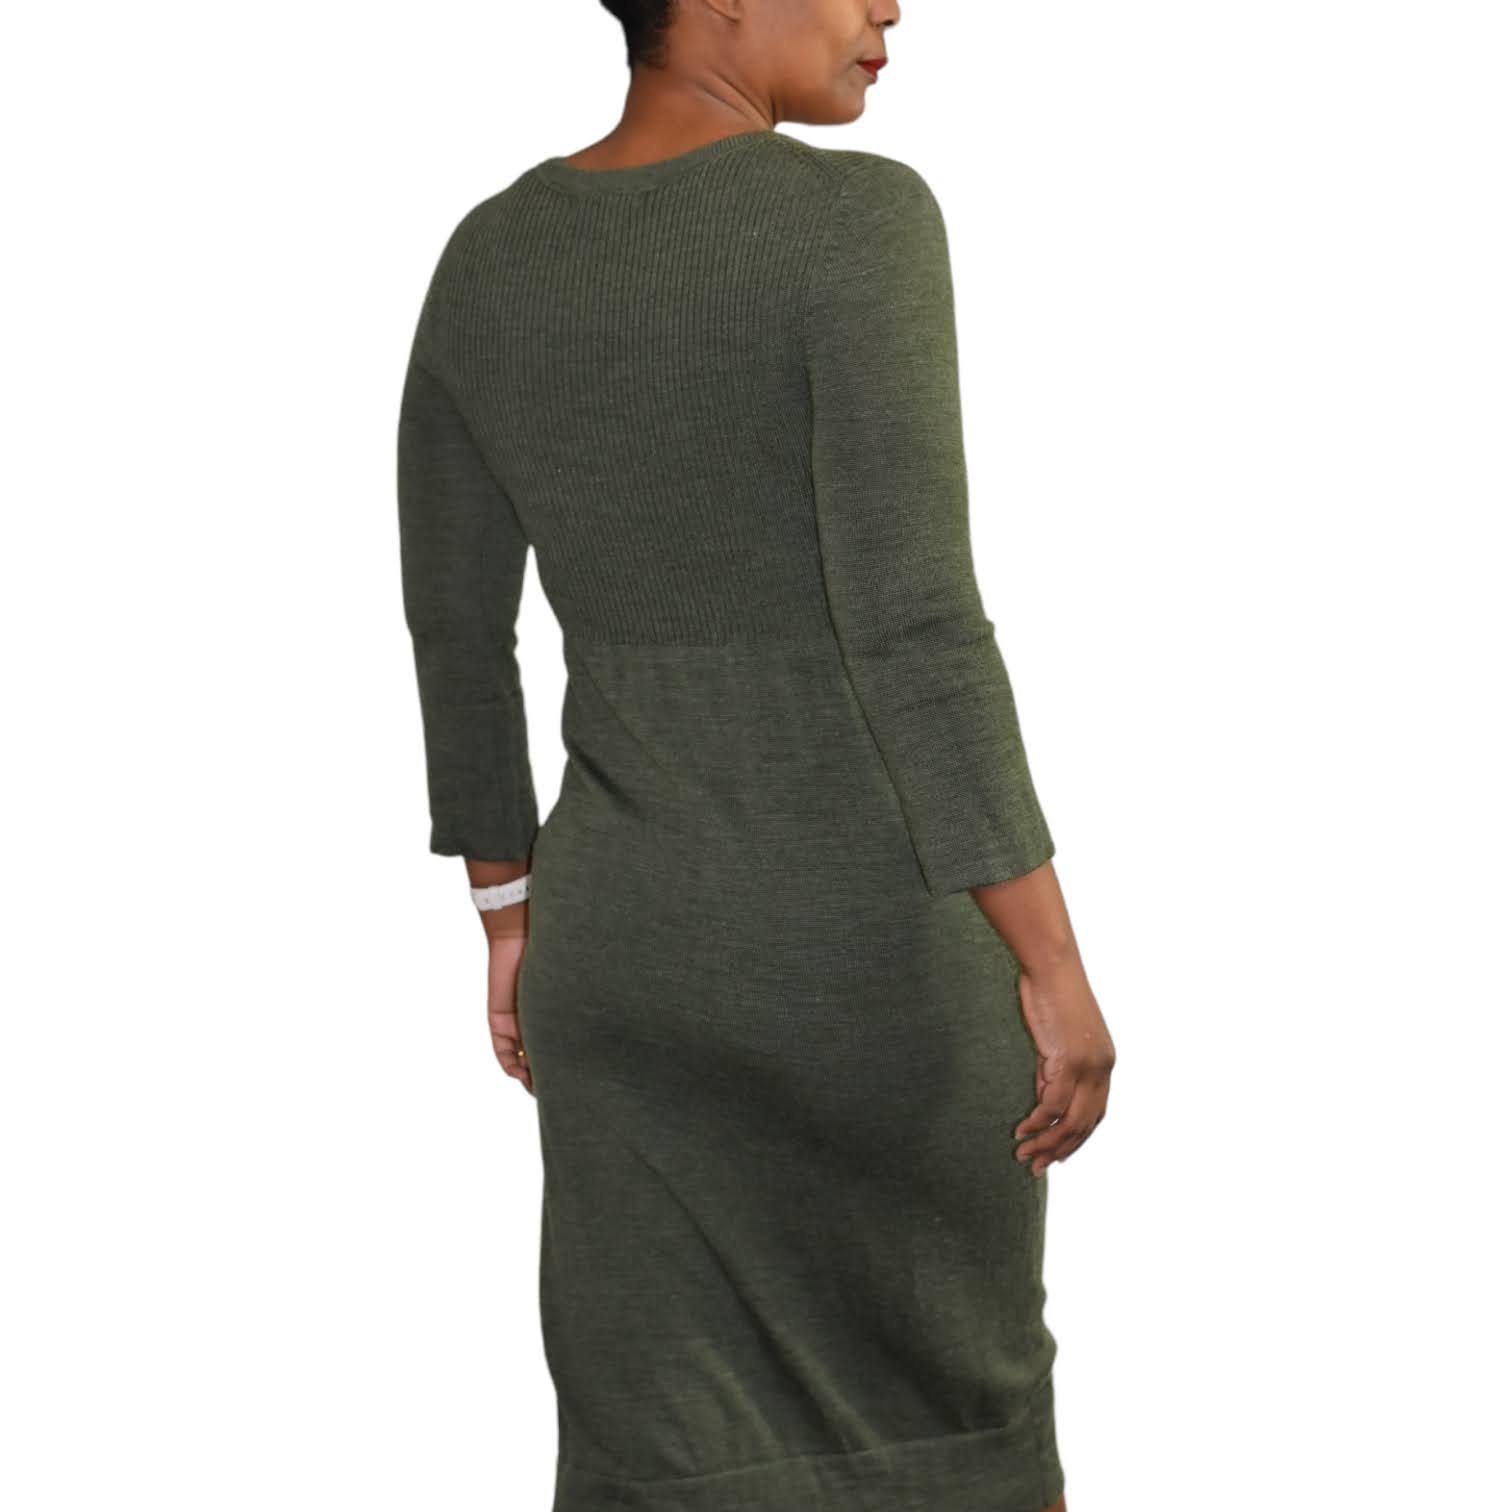 Boden Bodycon Wool Dress Size 4